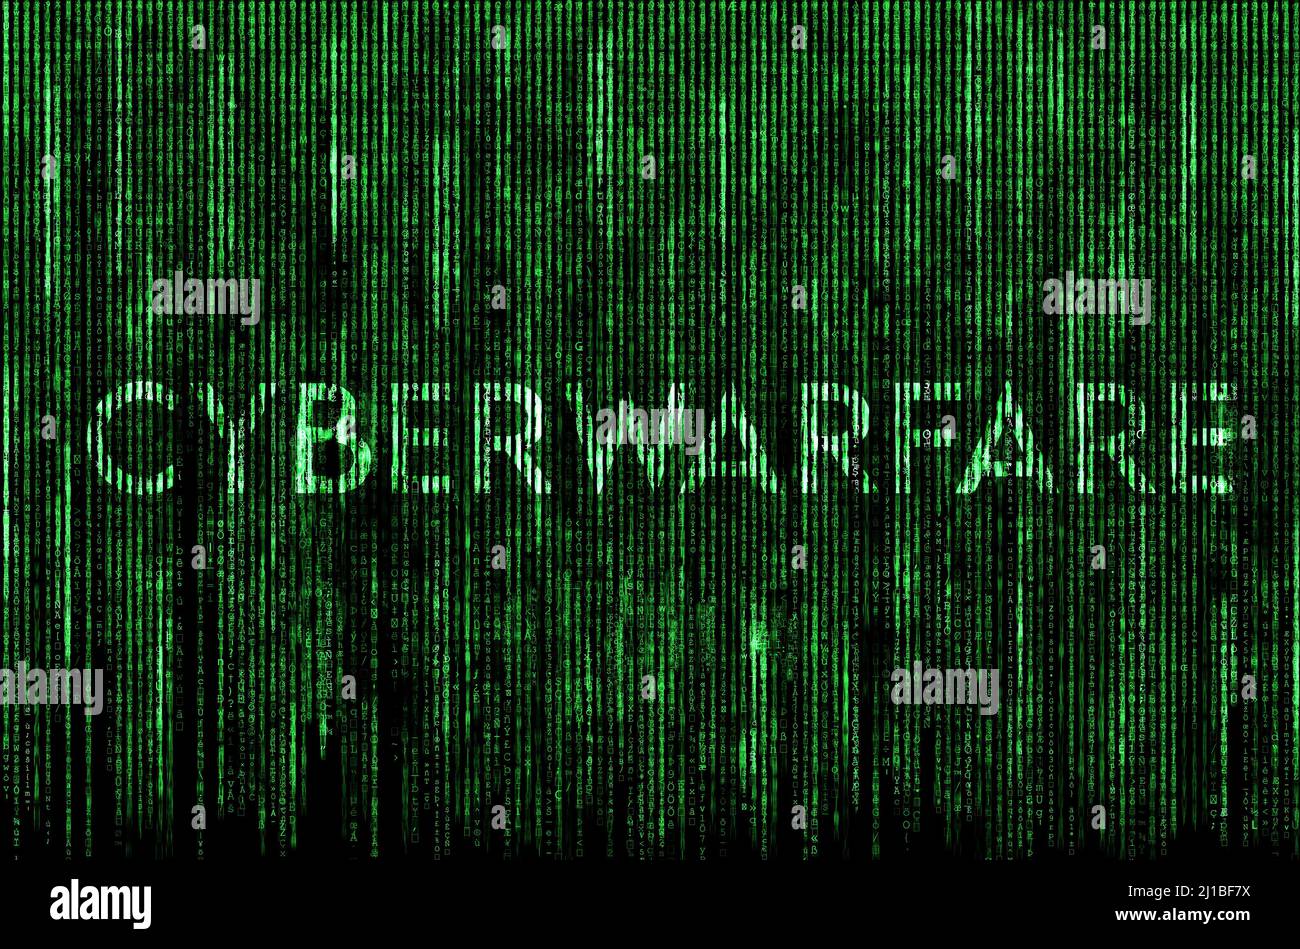 Cyberwar digital matrix illustration Stock Photo